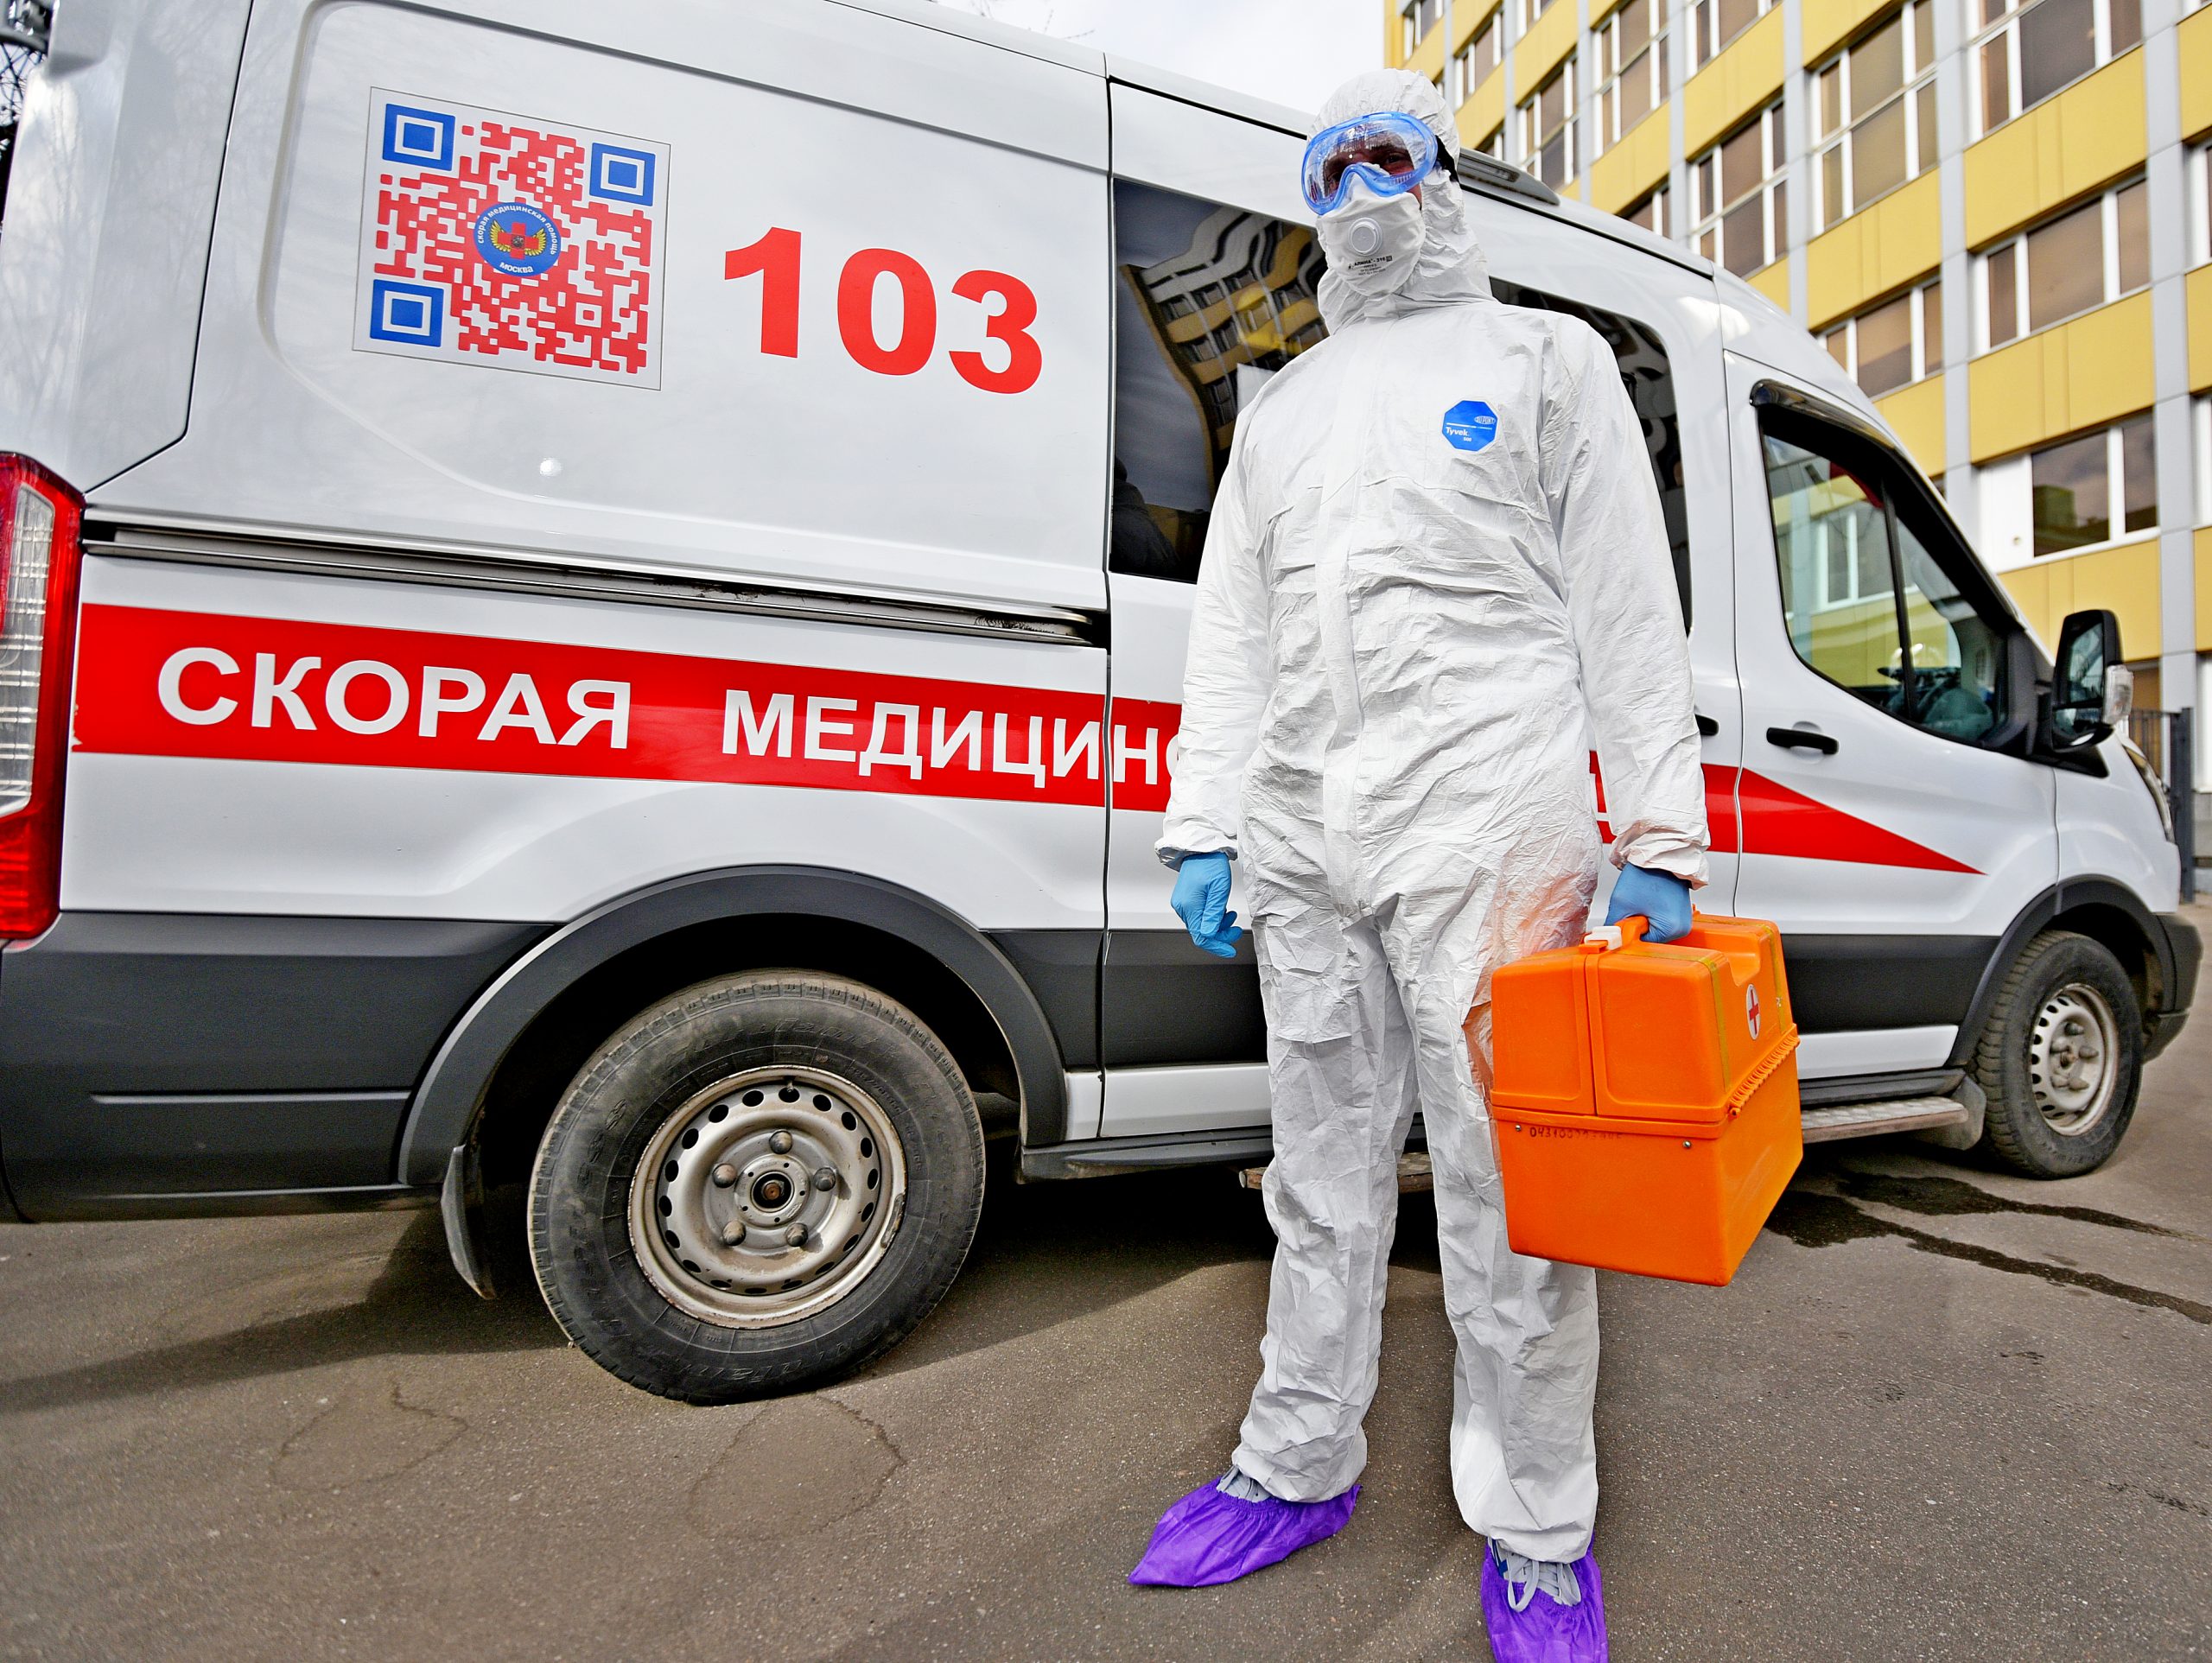 Московские врачи поставили почти 2,1 тысячи диагнозов COVID-19 за сутки